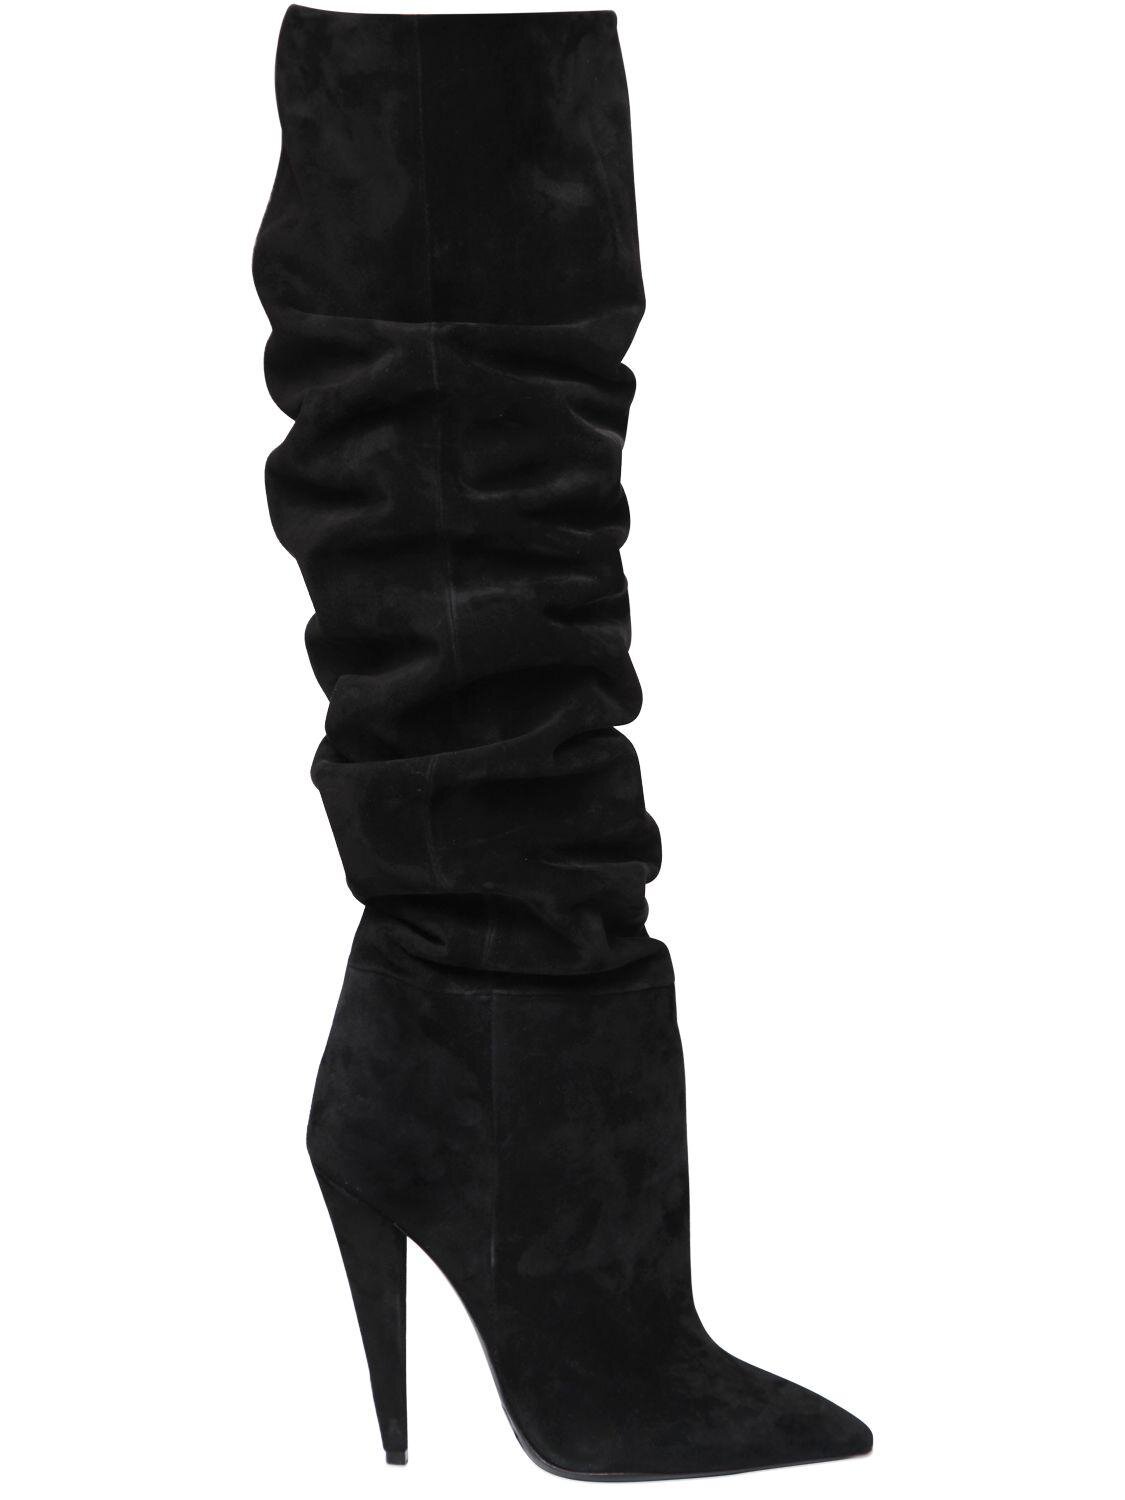 Saint Laurent Era Knee-High Slouchy Boots in Black Suede.jpg